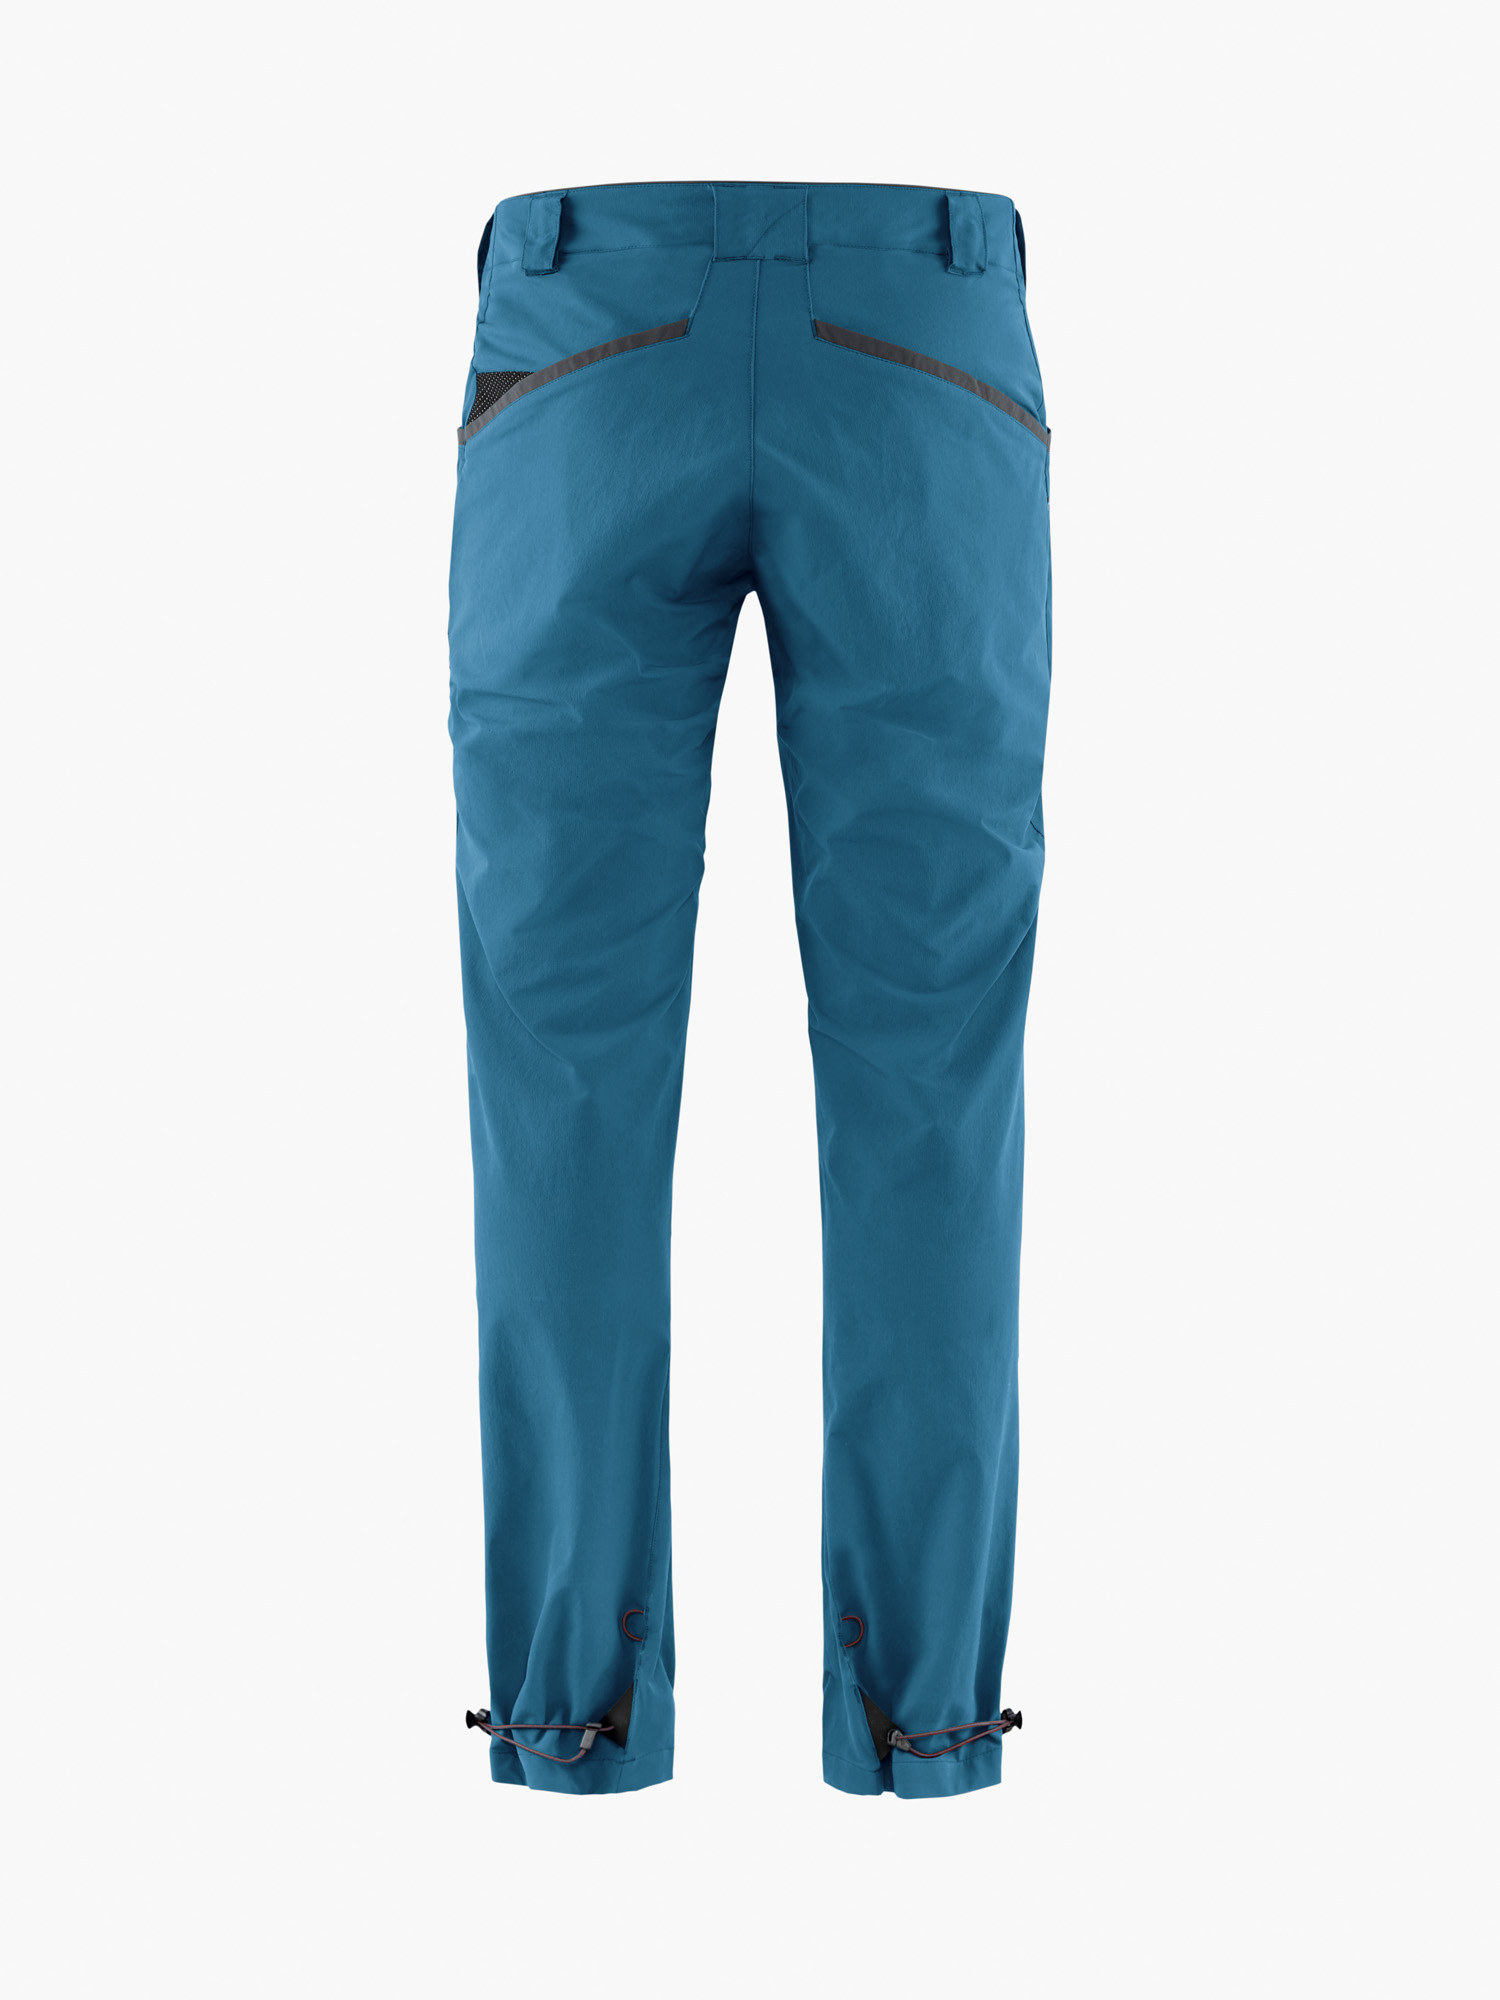 15569M91 - Vanadis 2.0 Pants M's - Monkshood Blue